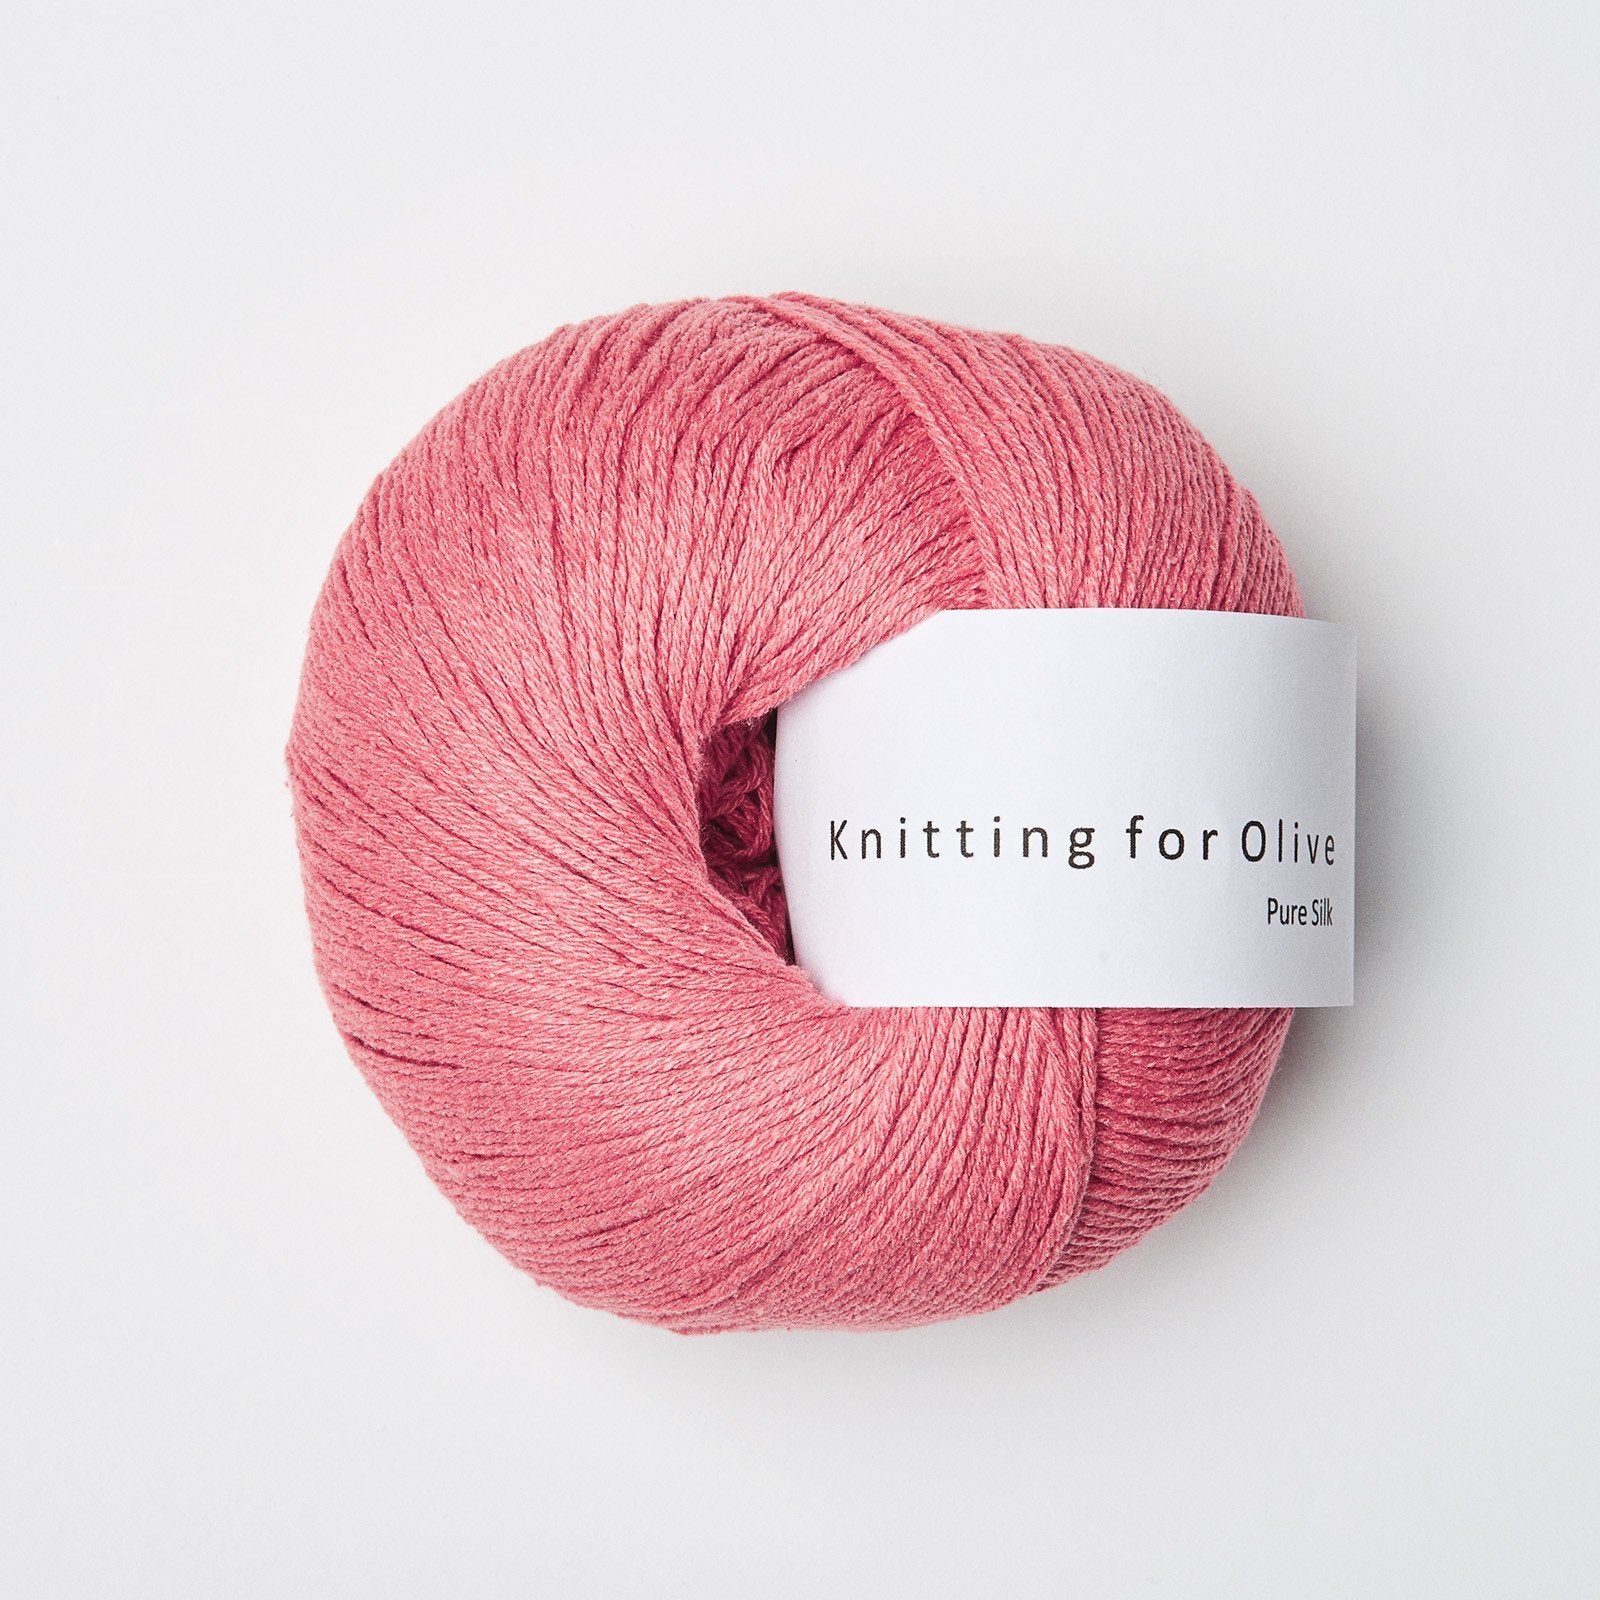 Knitting_for_olive_hindbaerpink_5245_new